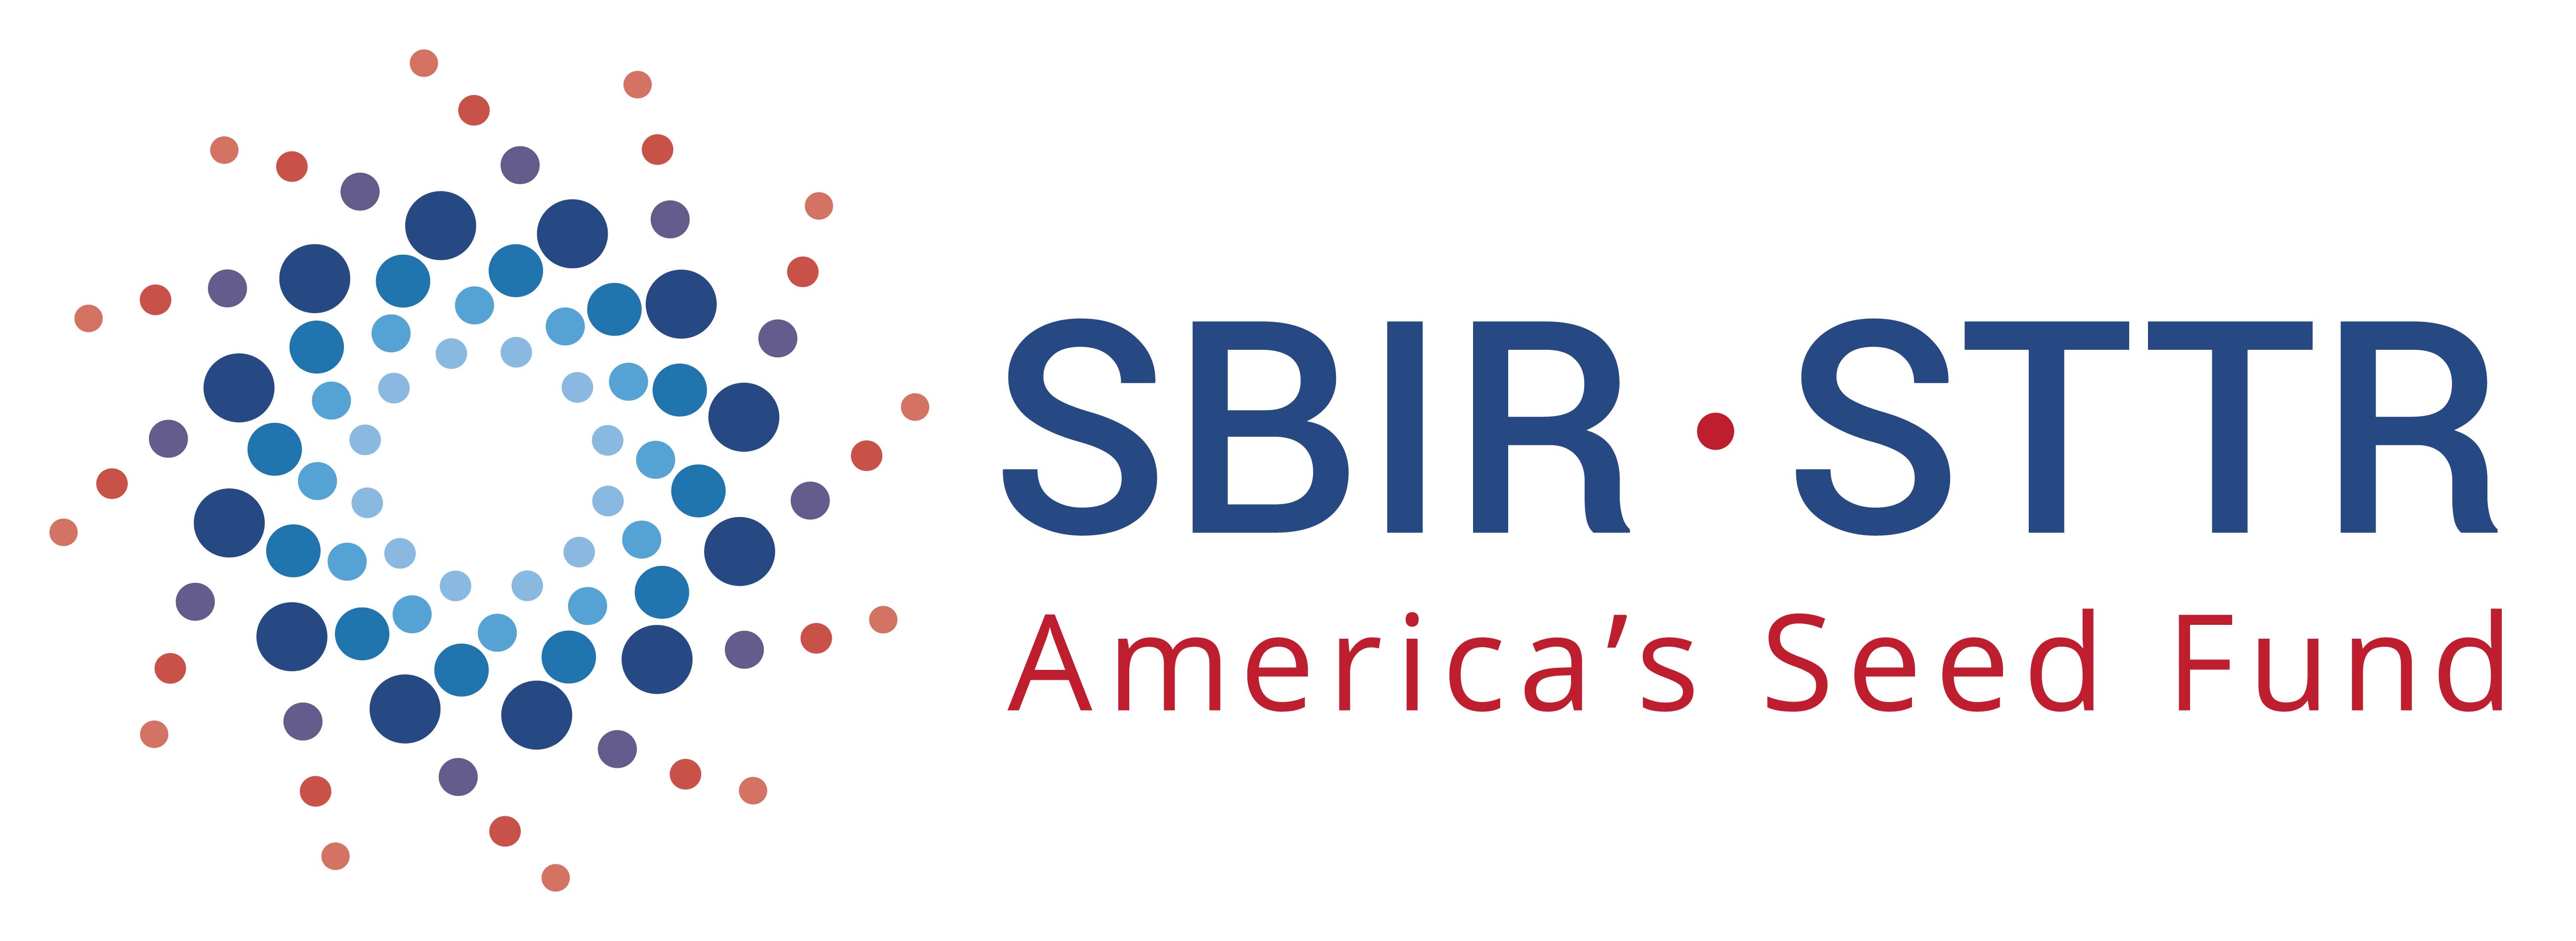 SBIR STTR logo